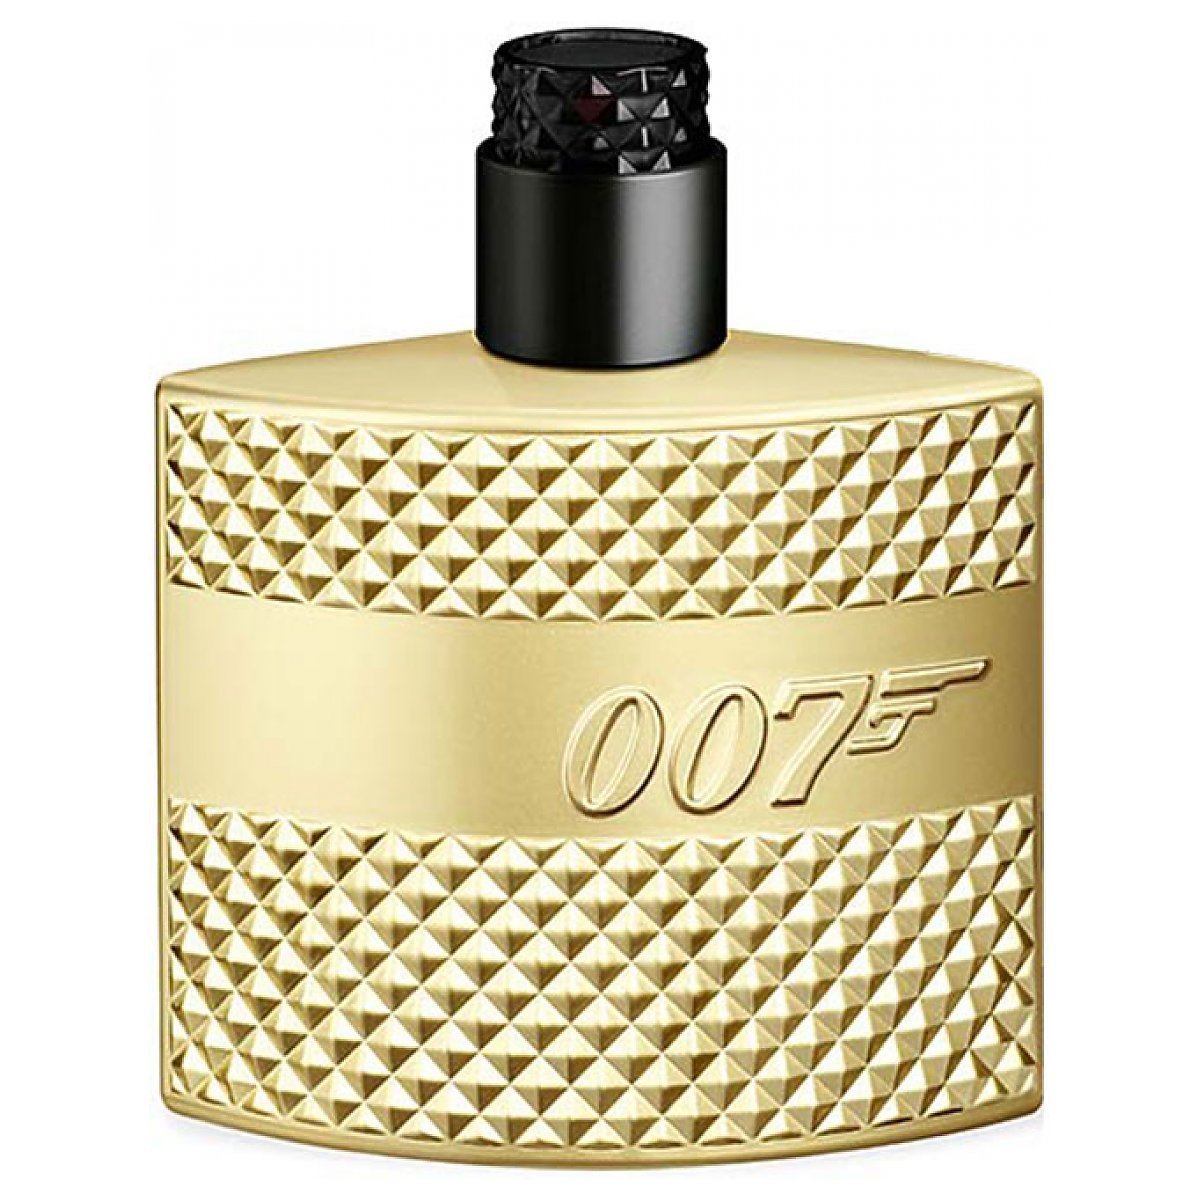 James Bond 007 50 Years Limited Edition Eau De Toilette Spray 75ml - Feel Gorgeous